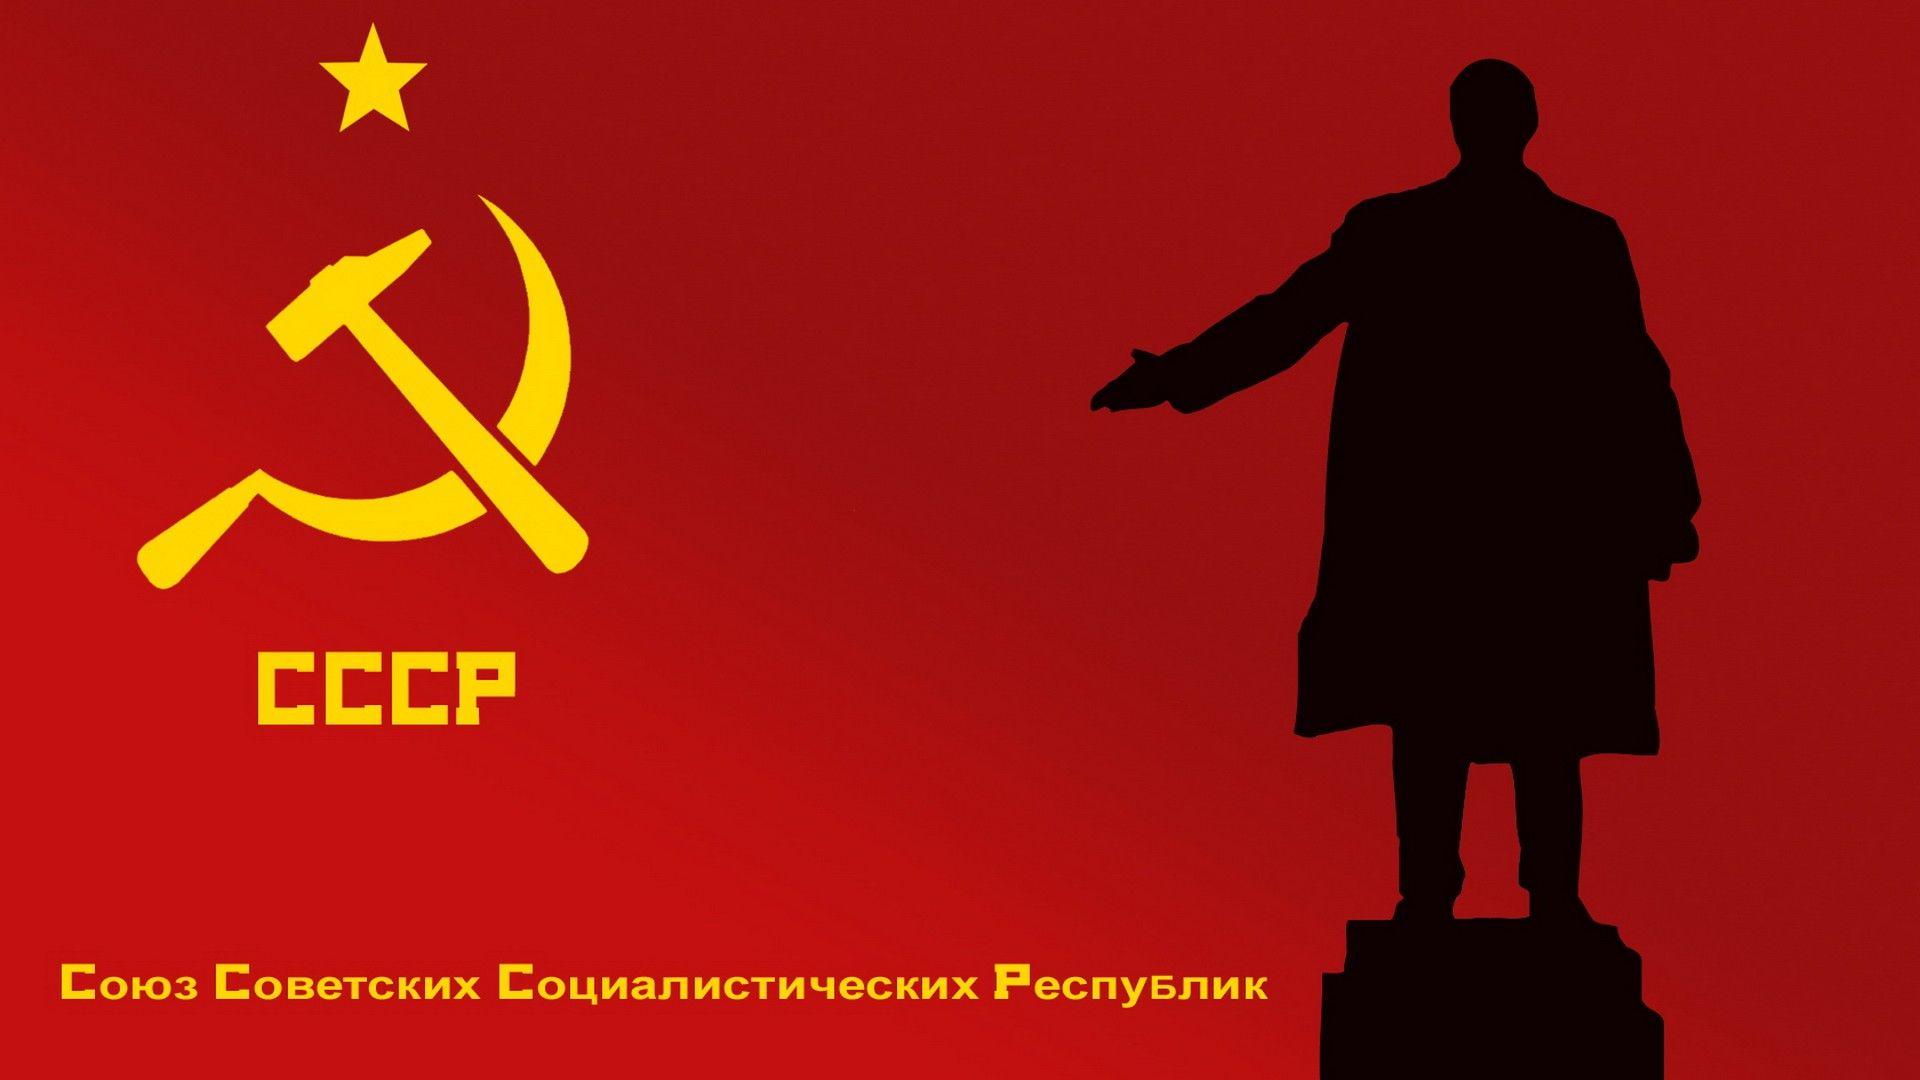 Beautiful Photo: Communism Wallpaper, Amazing Communism Image